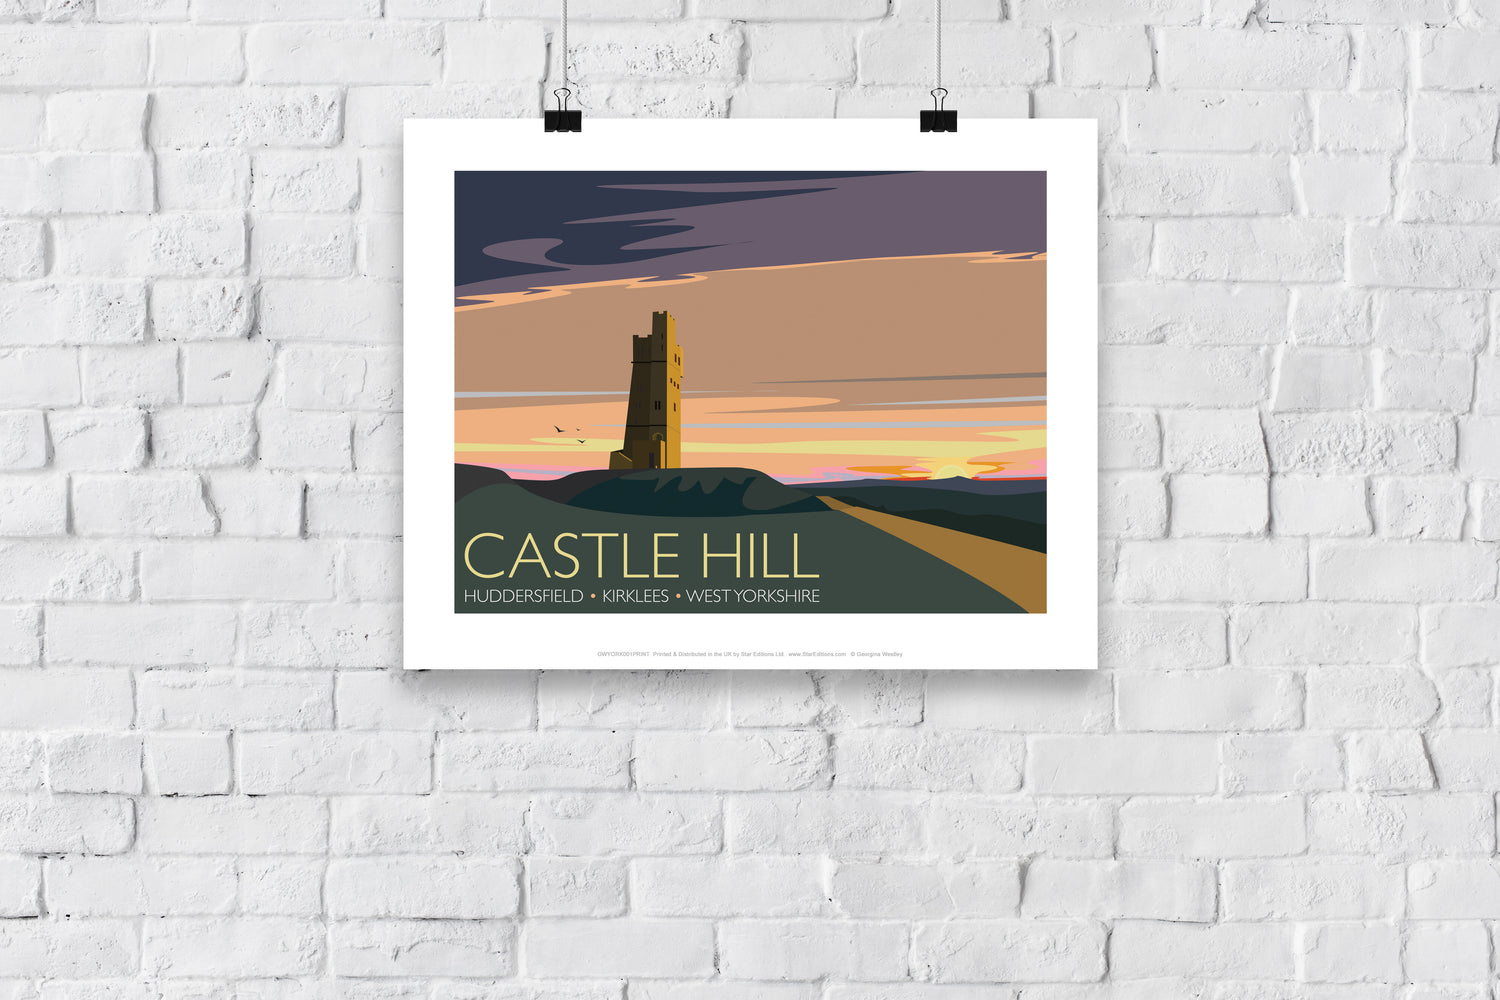 Castle Hill, Huddersfield, Yorkshire - Art Print